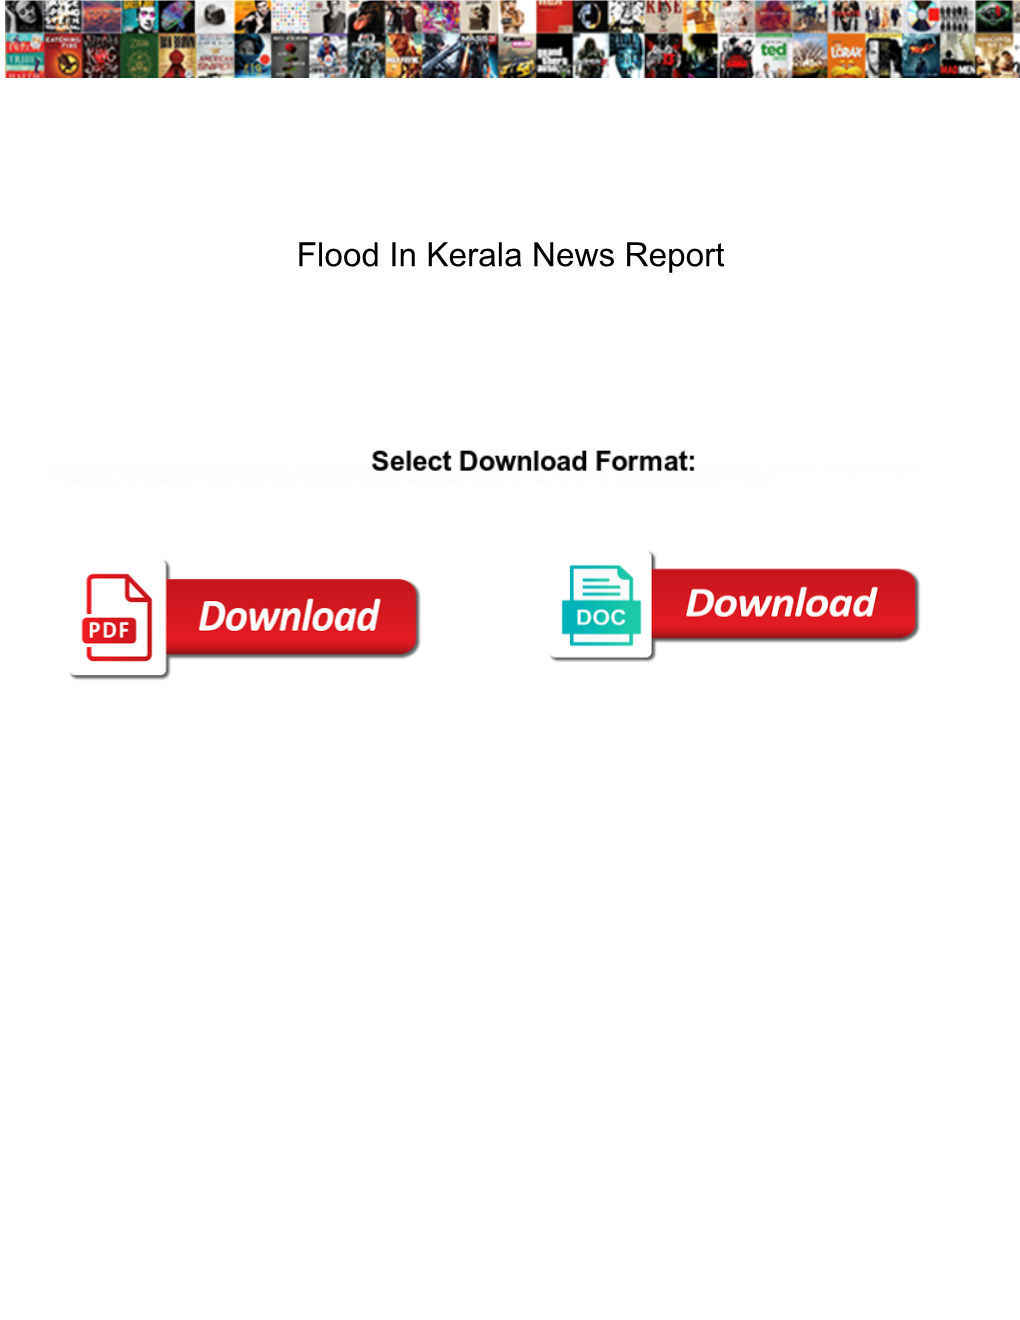 Flood in Kerala News Report